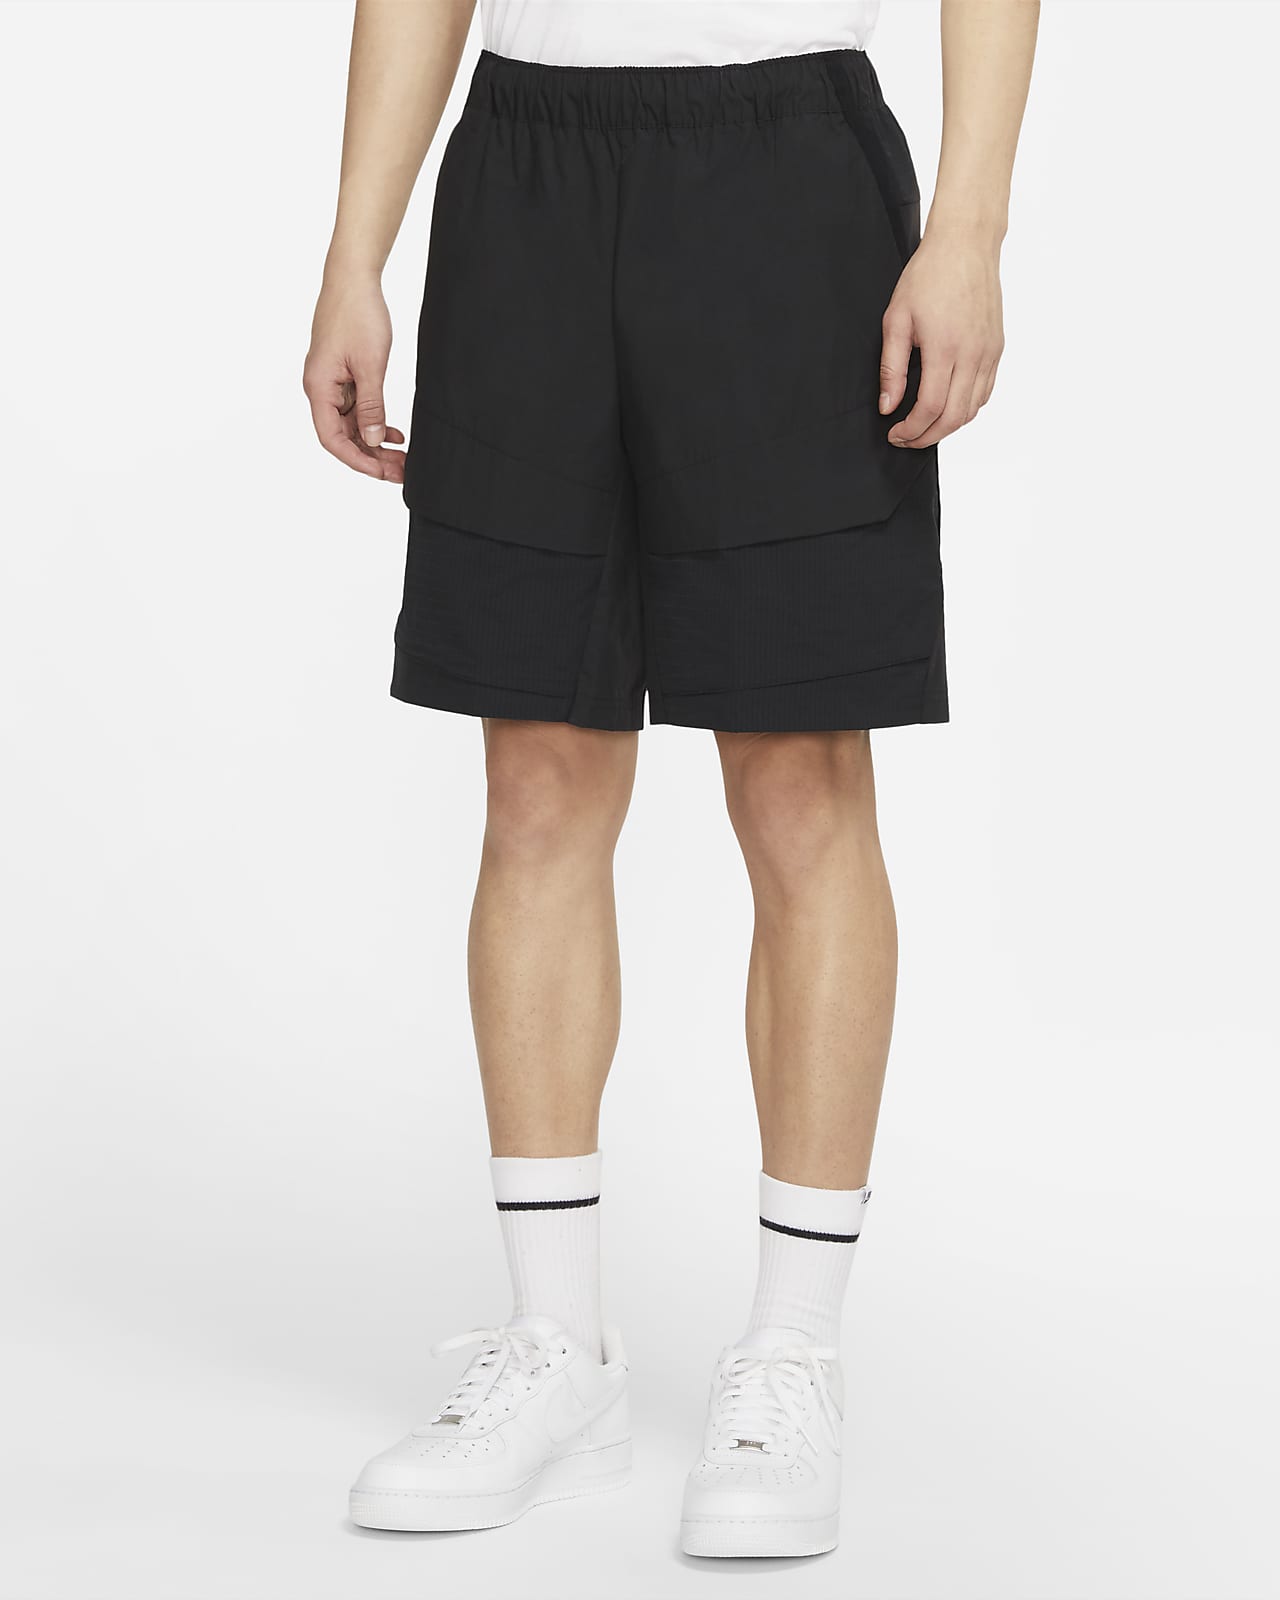 Nike公式 ナイキ スポーツウェア テック パック メンズ カーゴ ショートパンツ オンラインストア 通販サイト